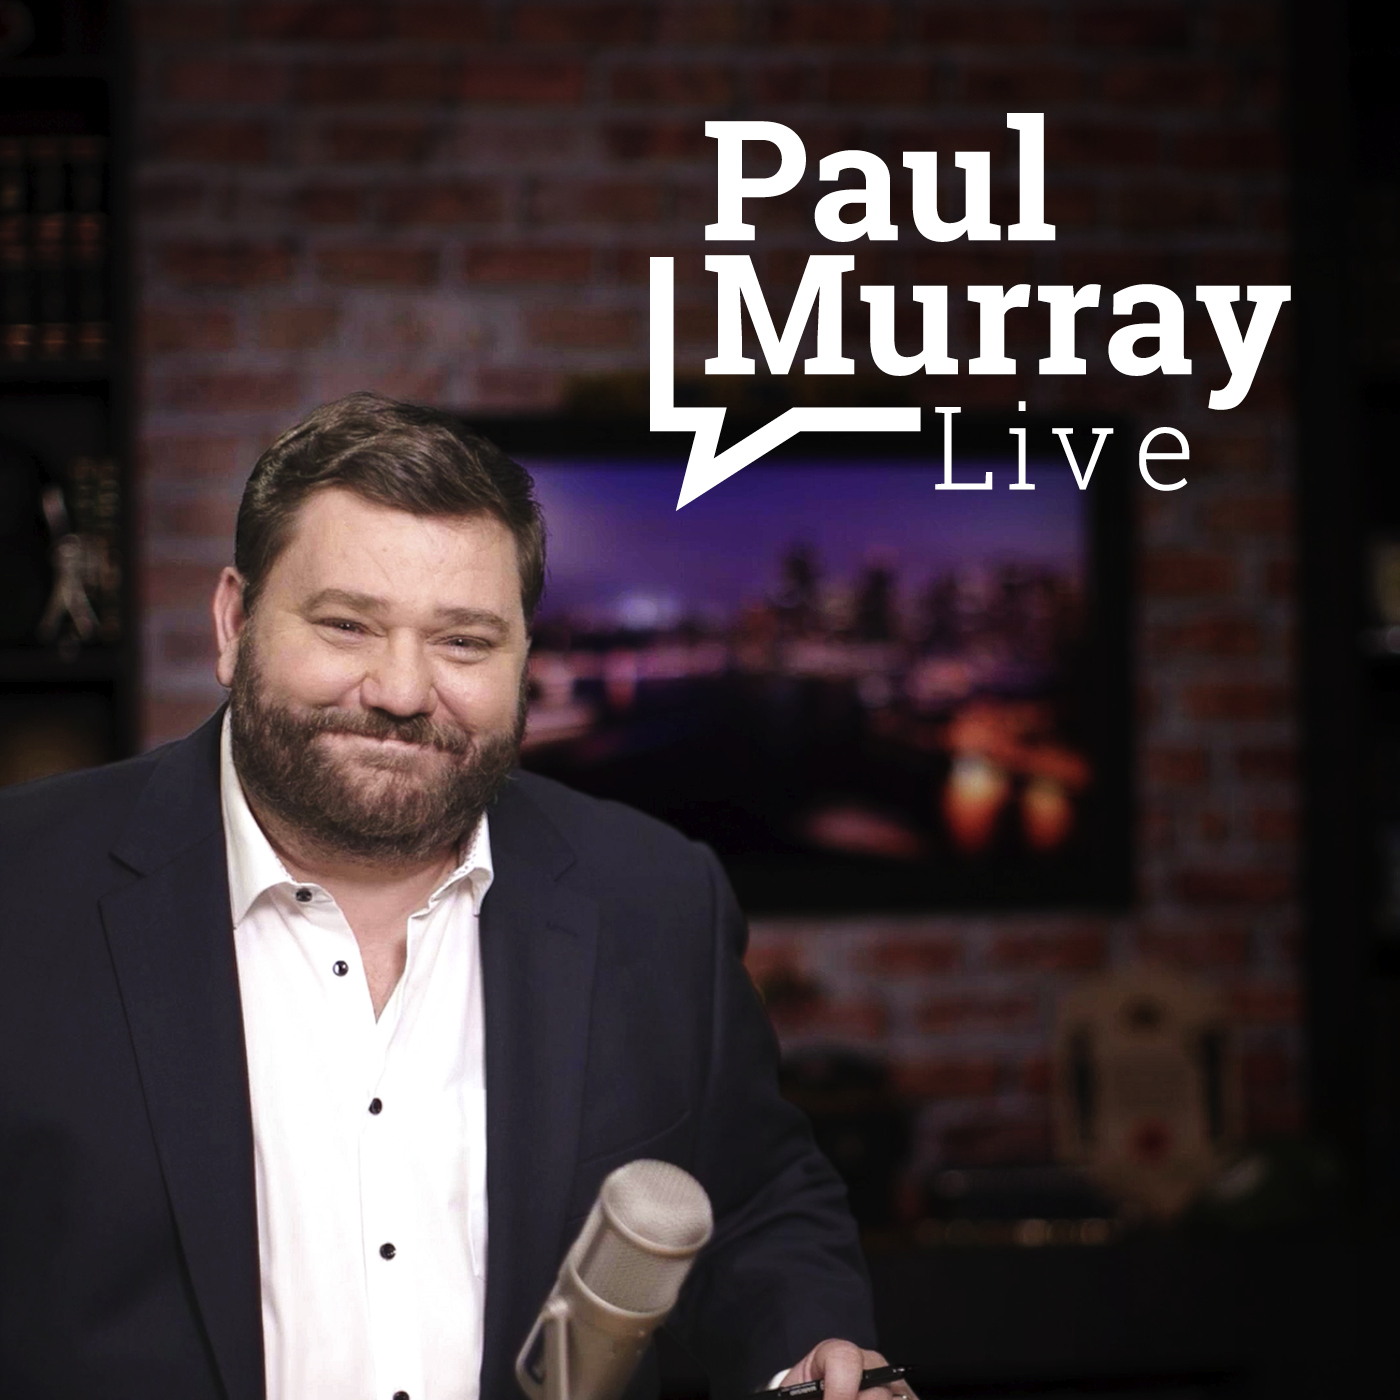 Paul Murray Live, Tuesday 1st June